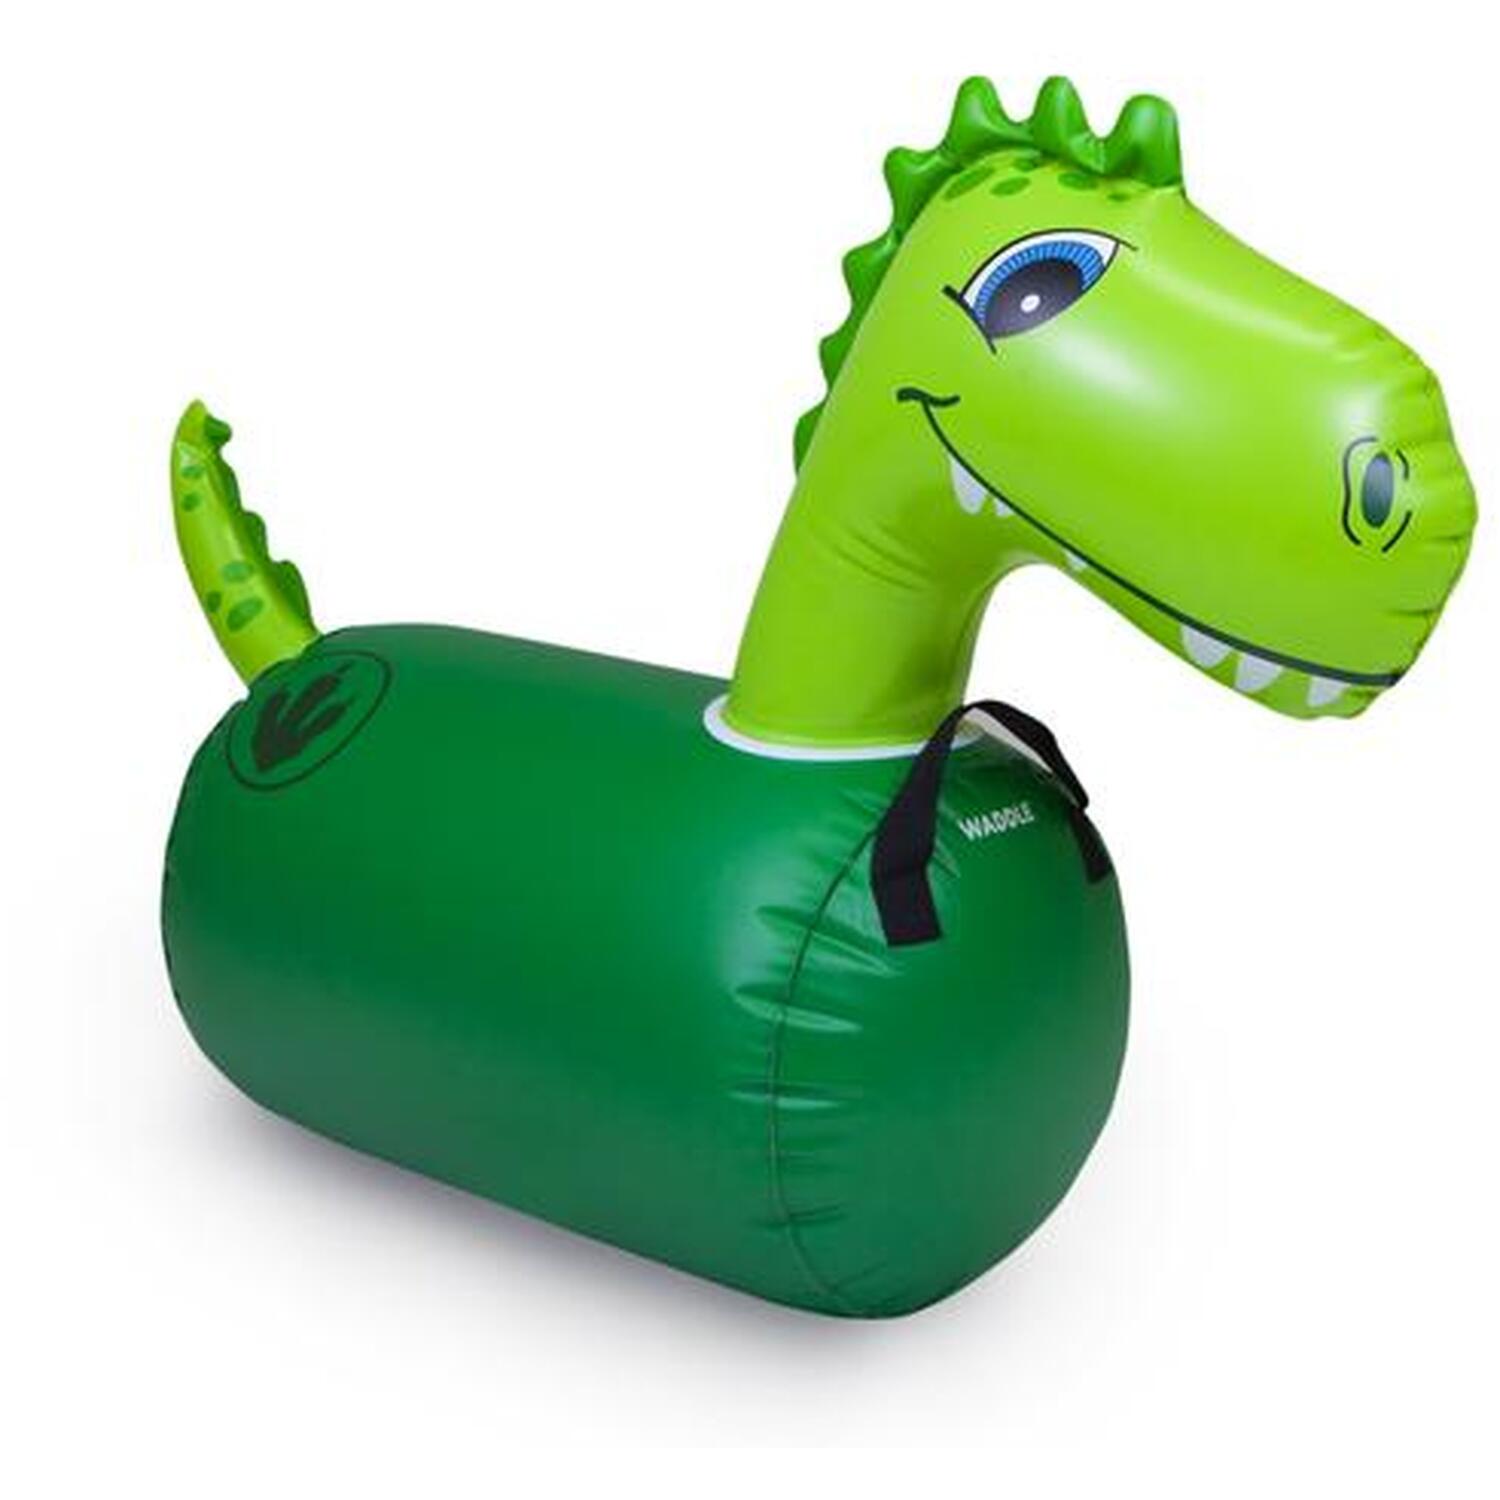  waddle hip dinosaur space hopper - green - green